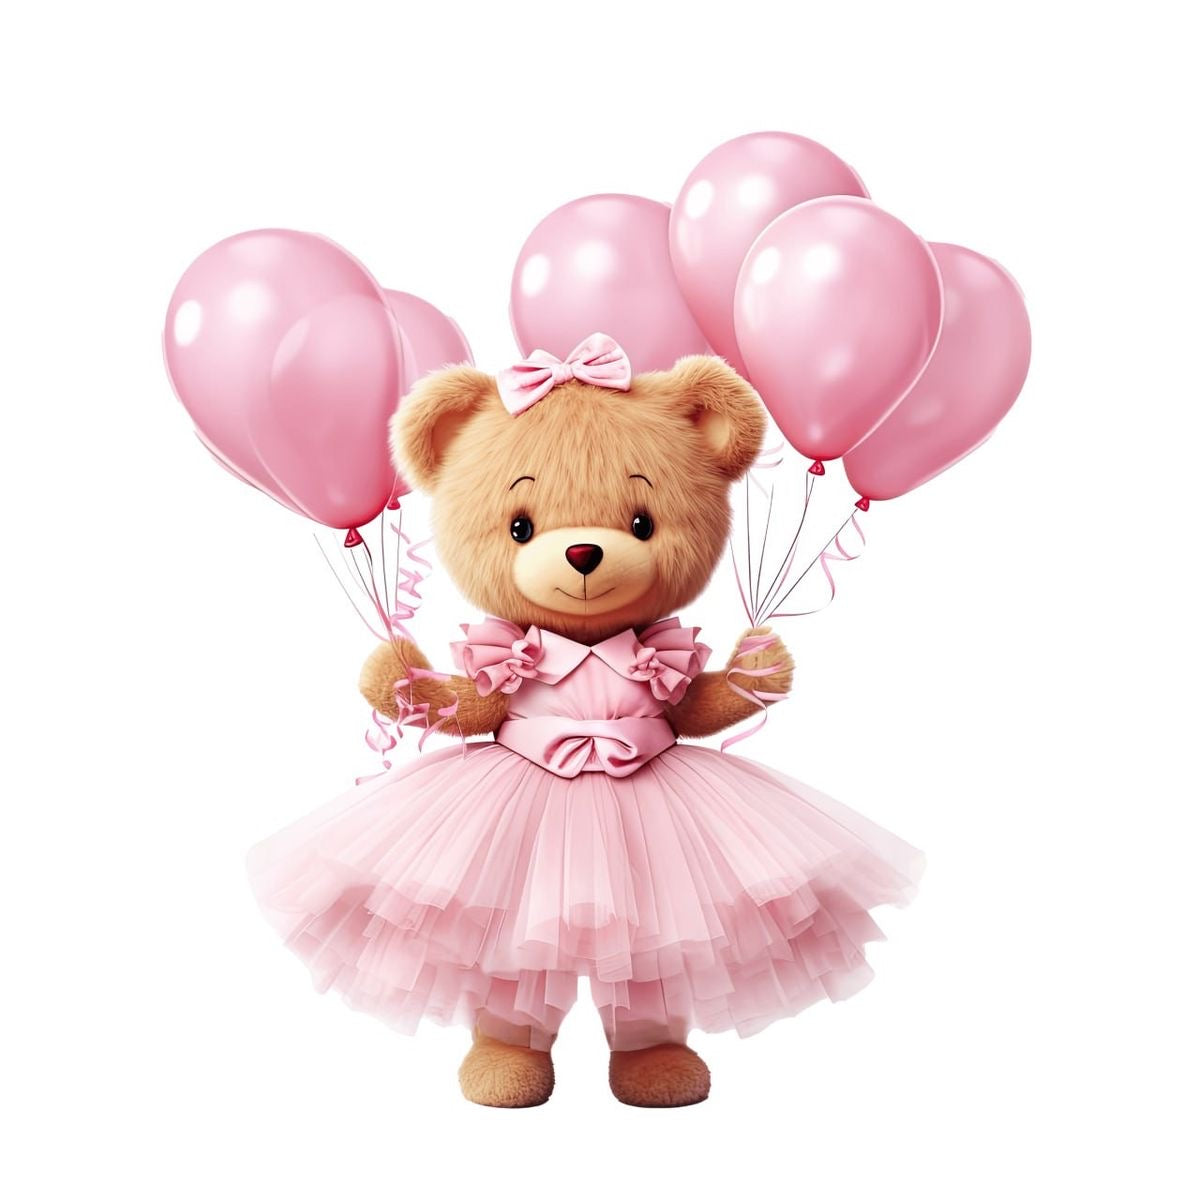 Kids Personalised Birthday Teddy Bear PJs - Plain Pink , Ages 6 Months - 10 Years